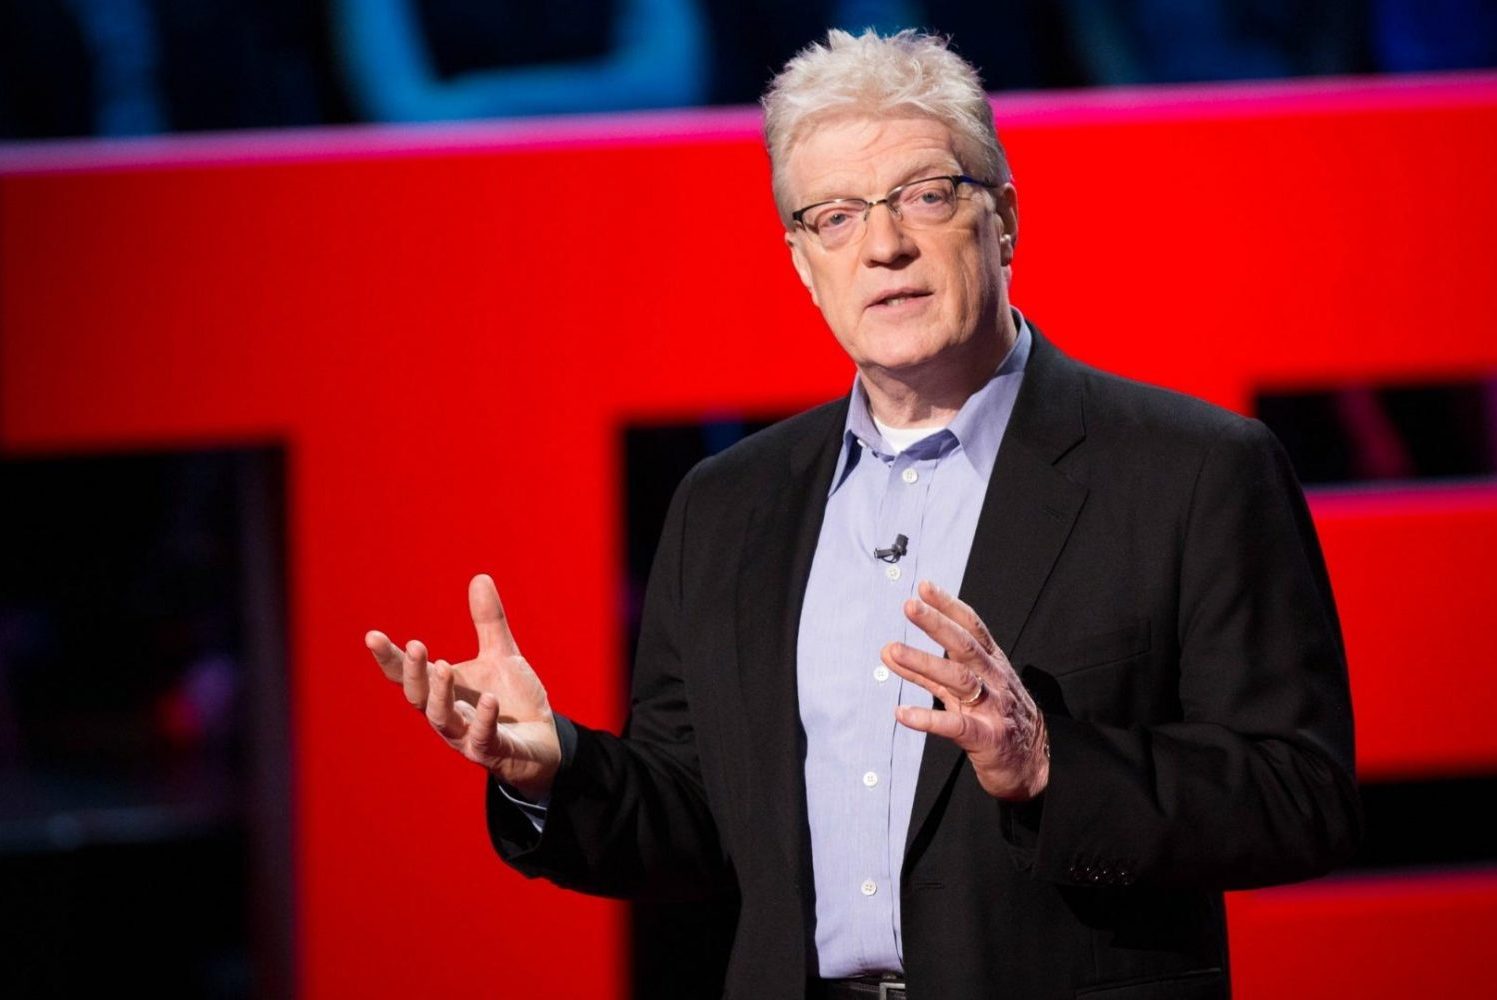 Sir Ken Robinson at a TED Talk on education